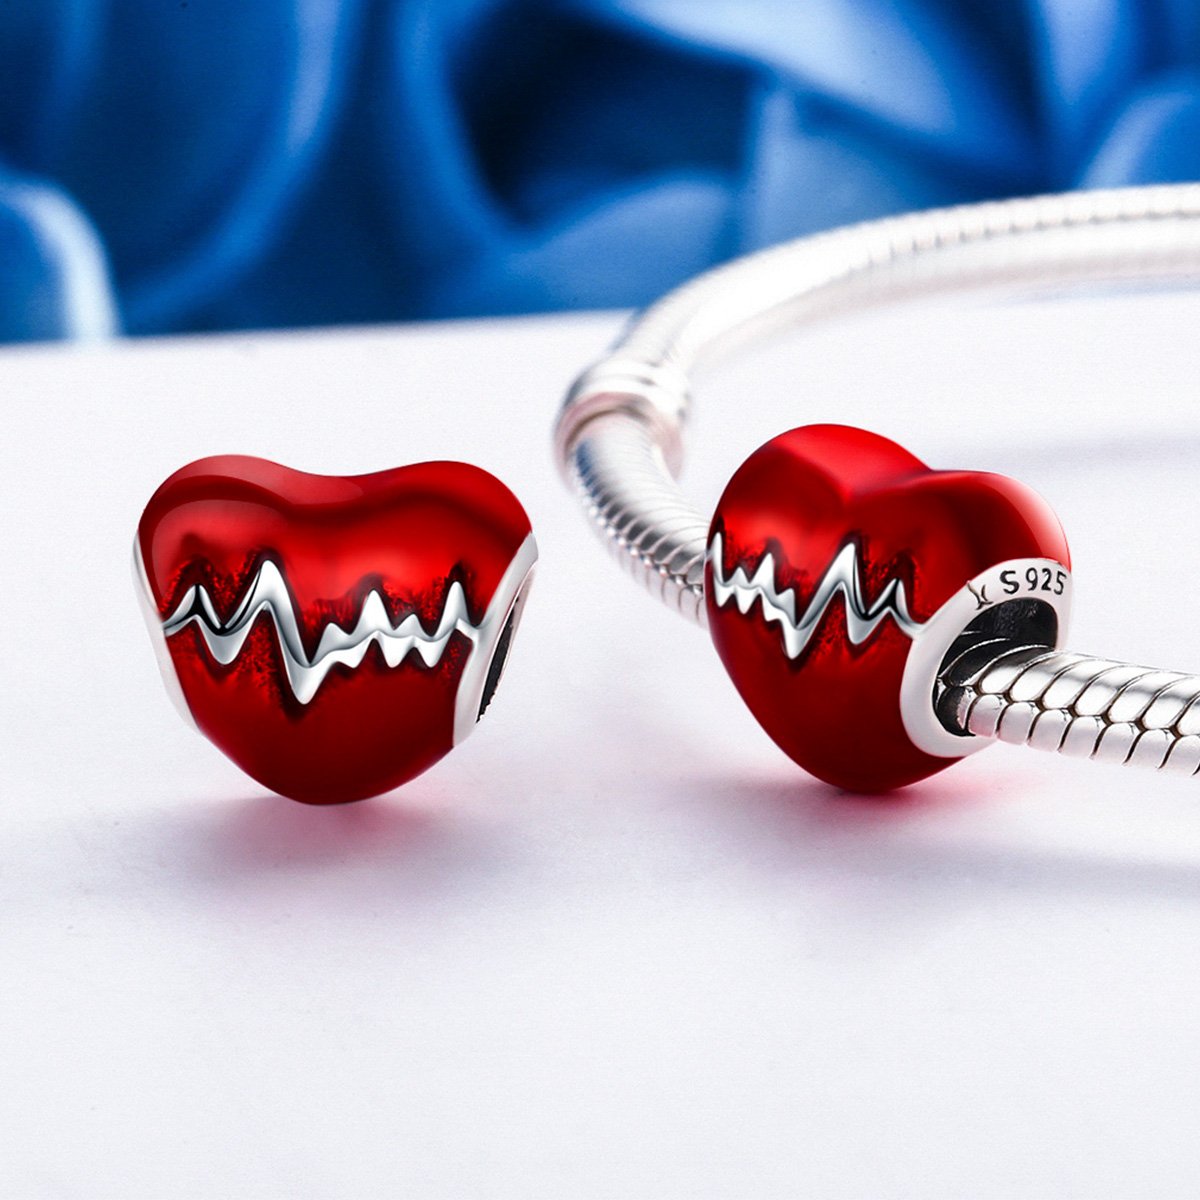 Sterling 925 silver charm the heart puls bead pendant fits Pandora charm and European charm bracelet Xaxe.com